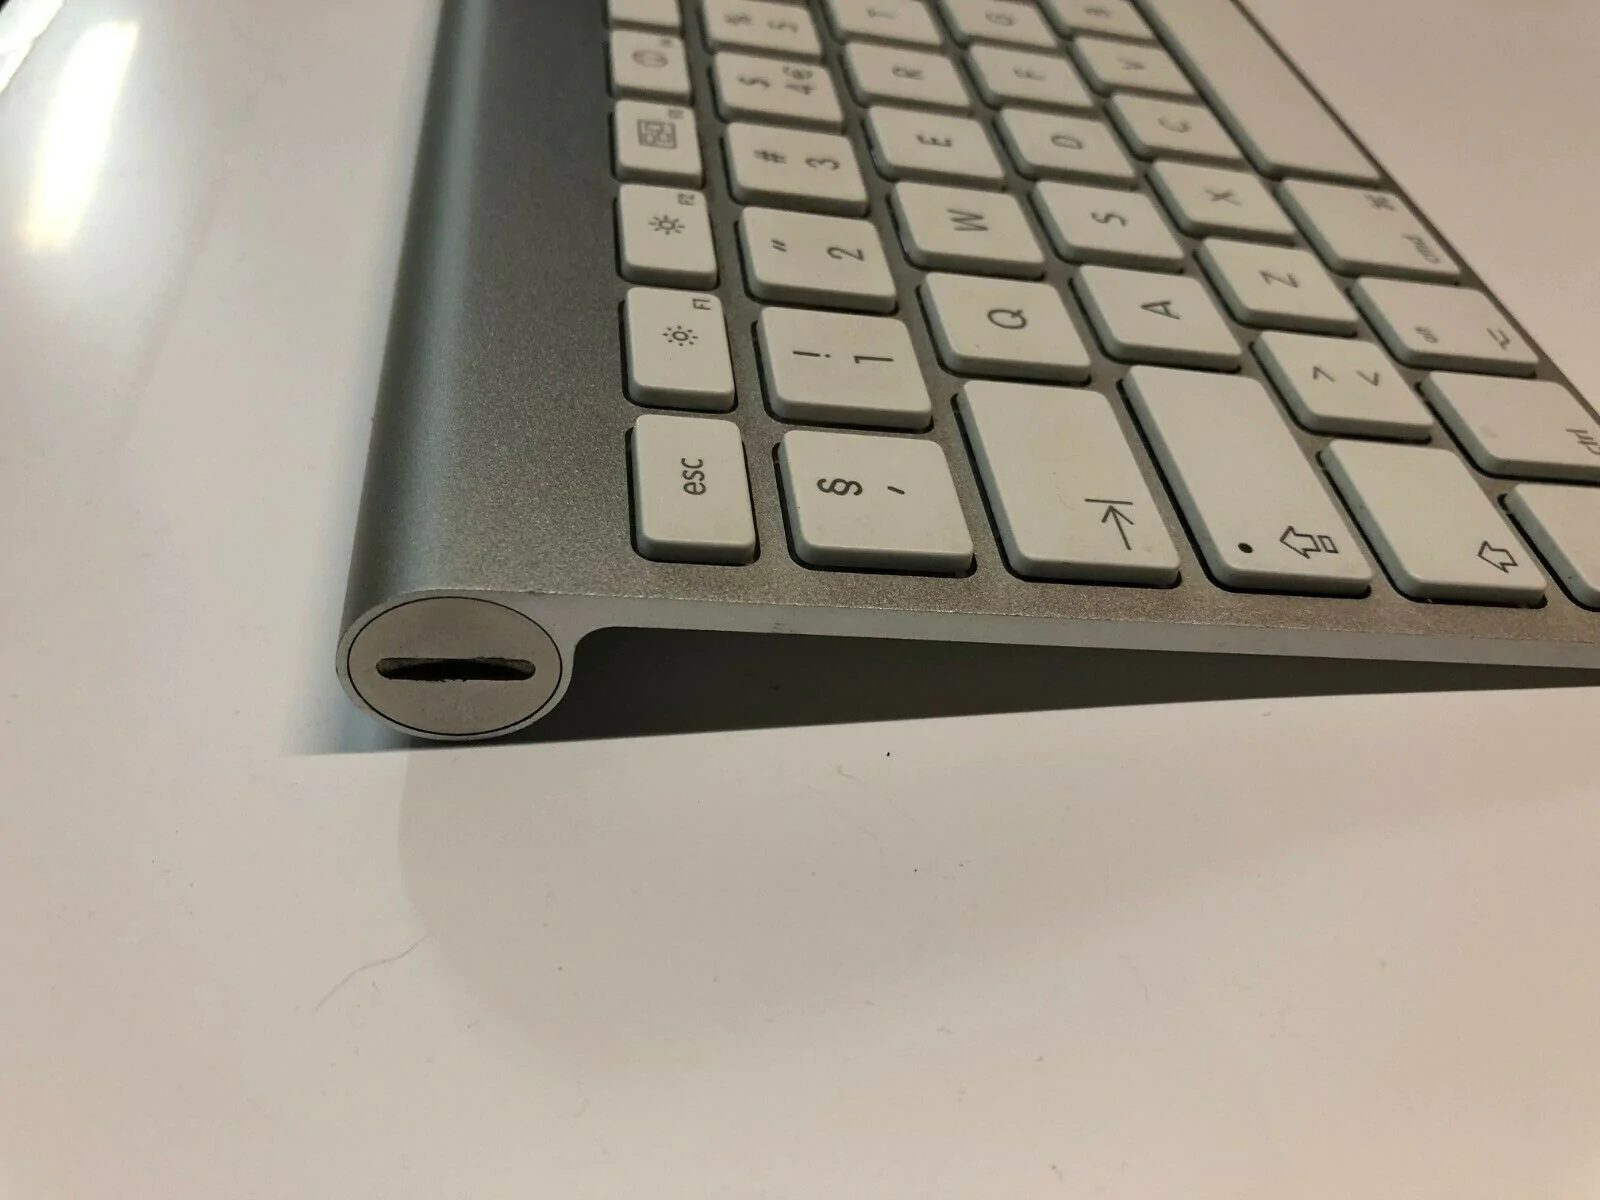 Apple A1314 (MC184LL/A) Wireless Keyboard - Silver